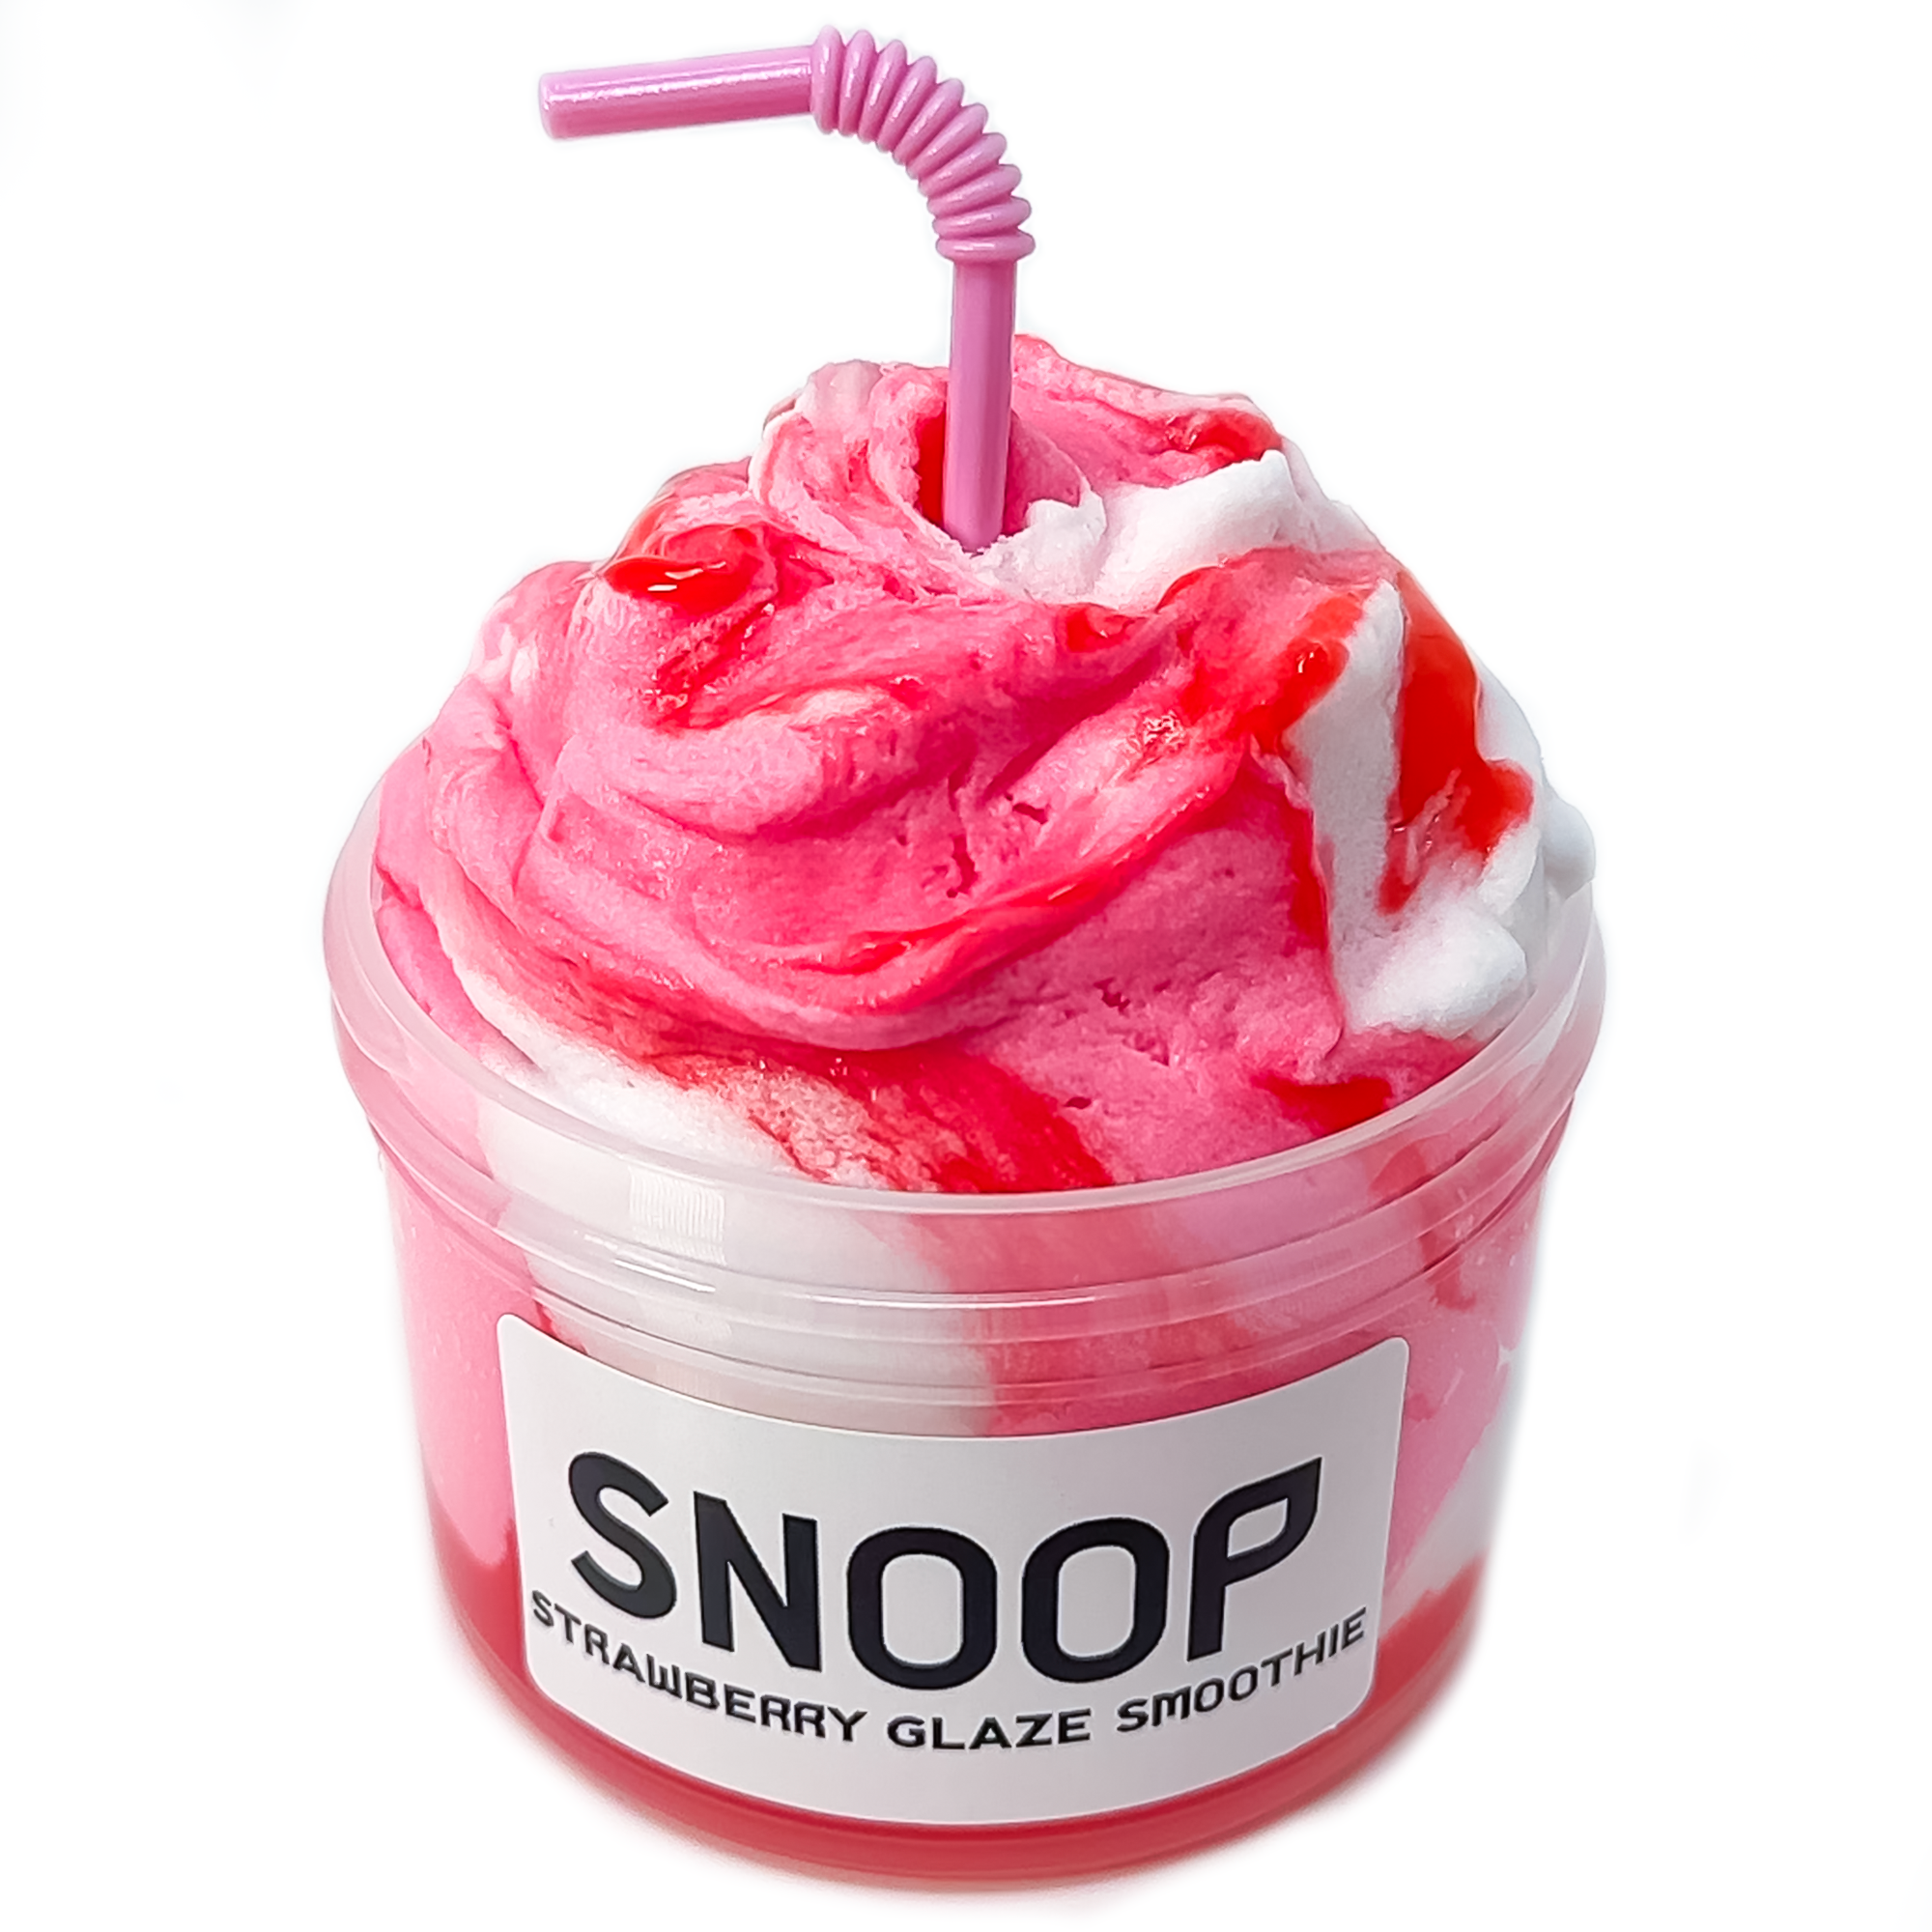 Snoop Strawberry Glaze Smoothie Slime